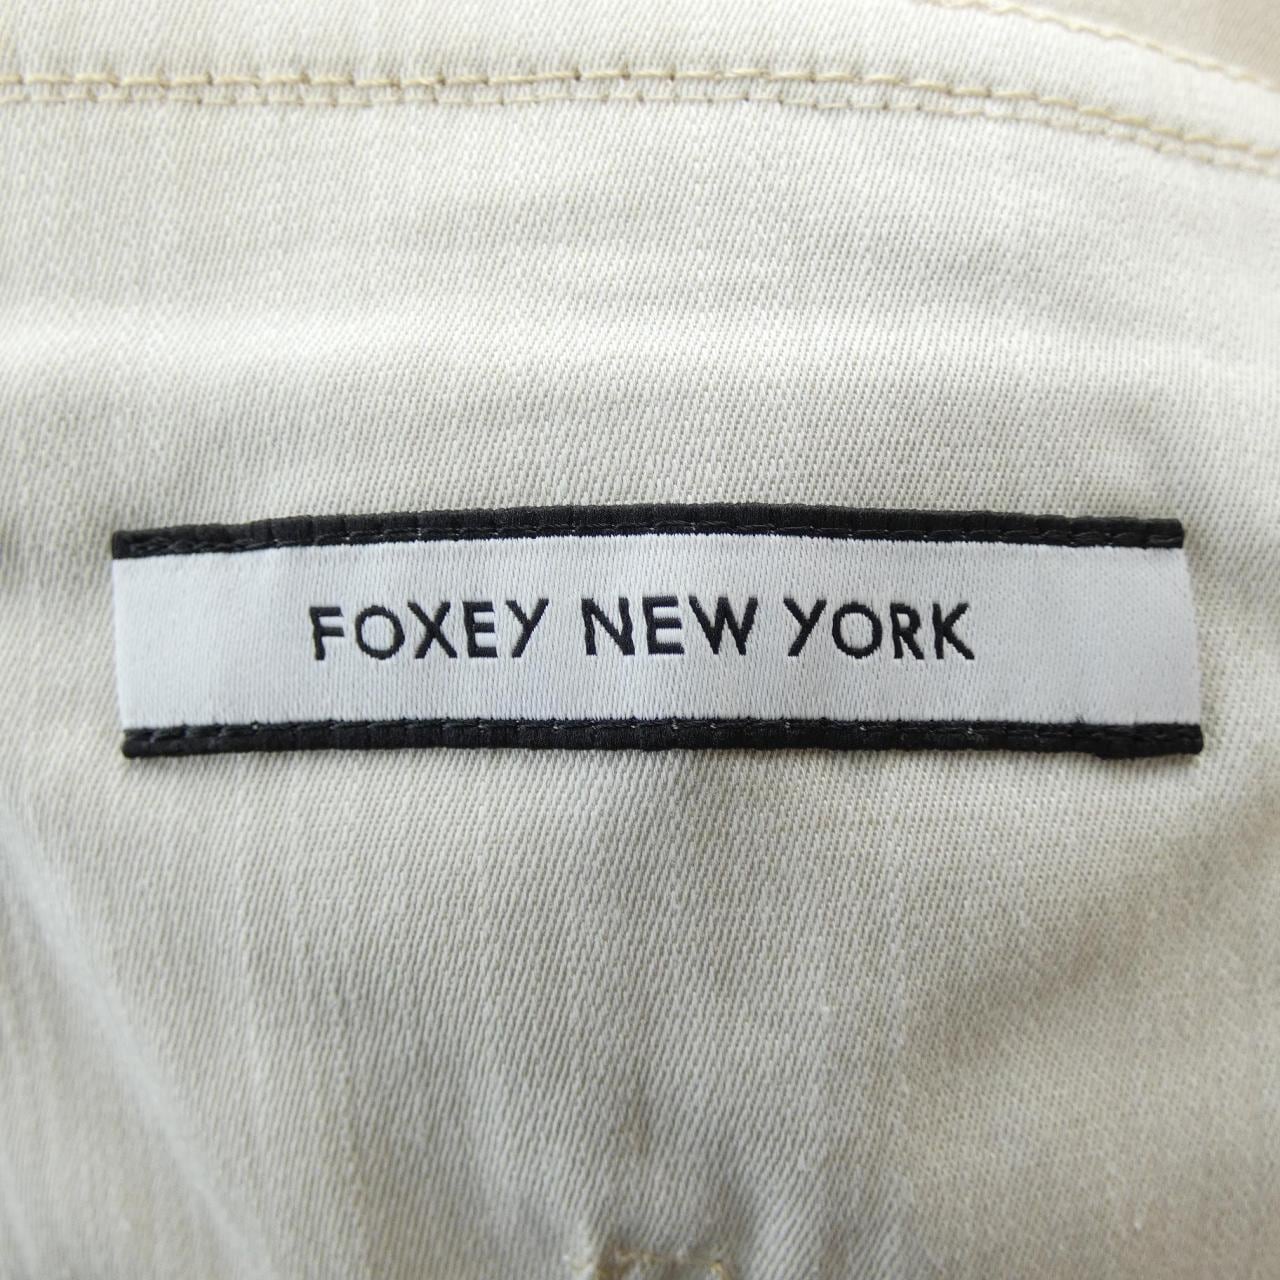 FOXCY紐約FOXEY NEW YORK夾克